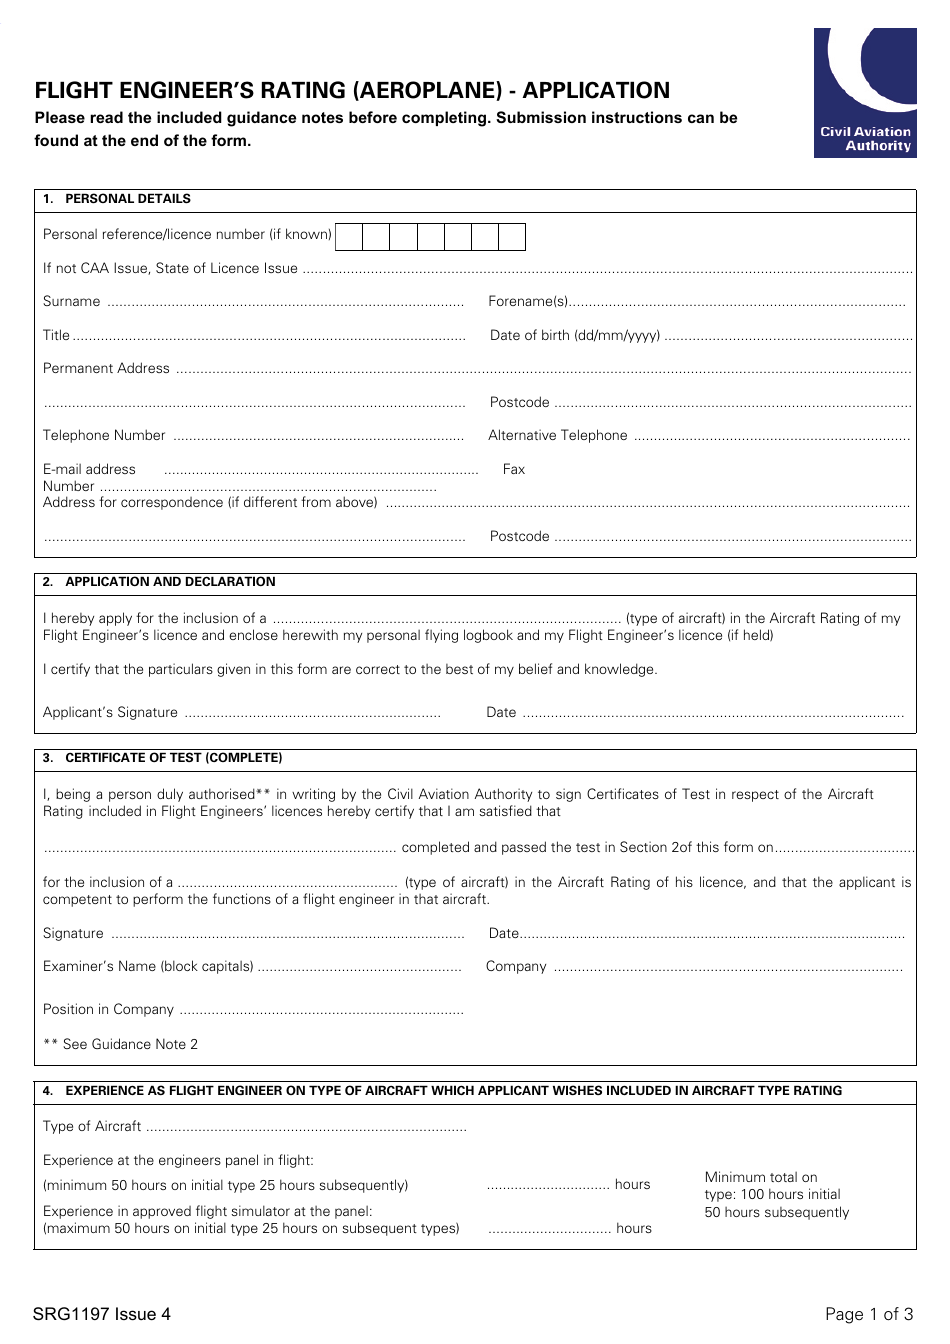 Form SRG1197 Flight Engineers Rating (Aeroplane) - Application - United Kingdom, Page 1